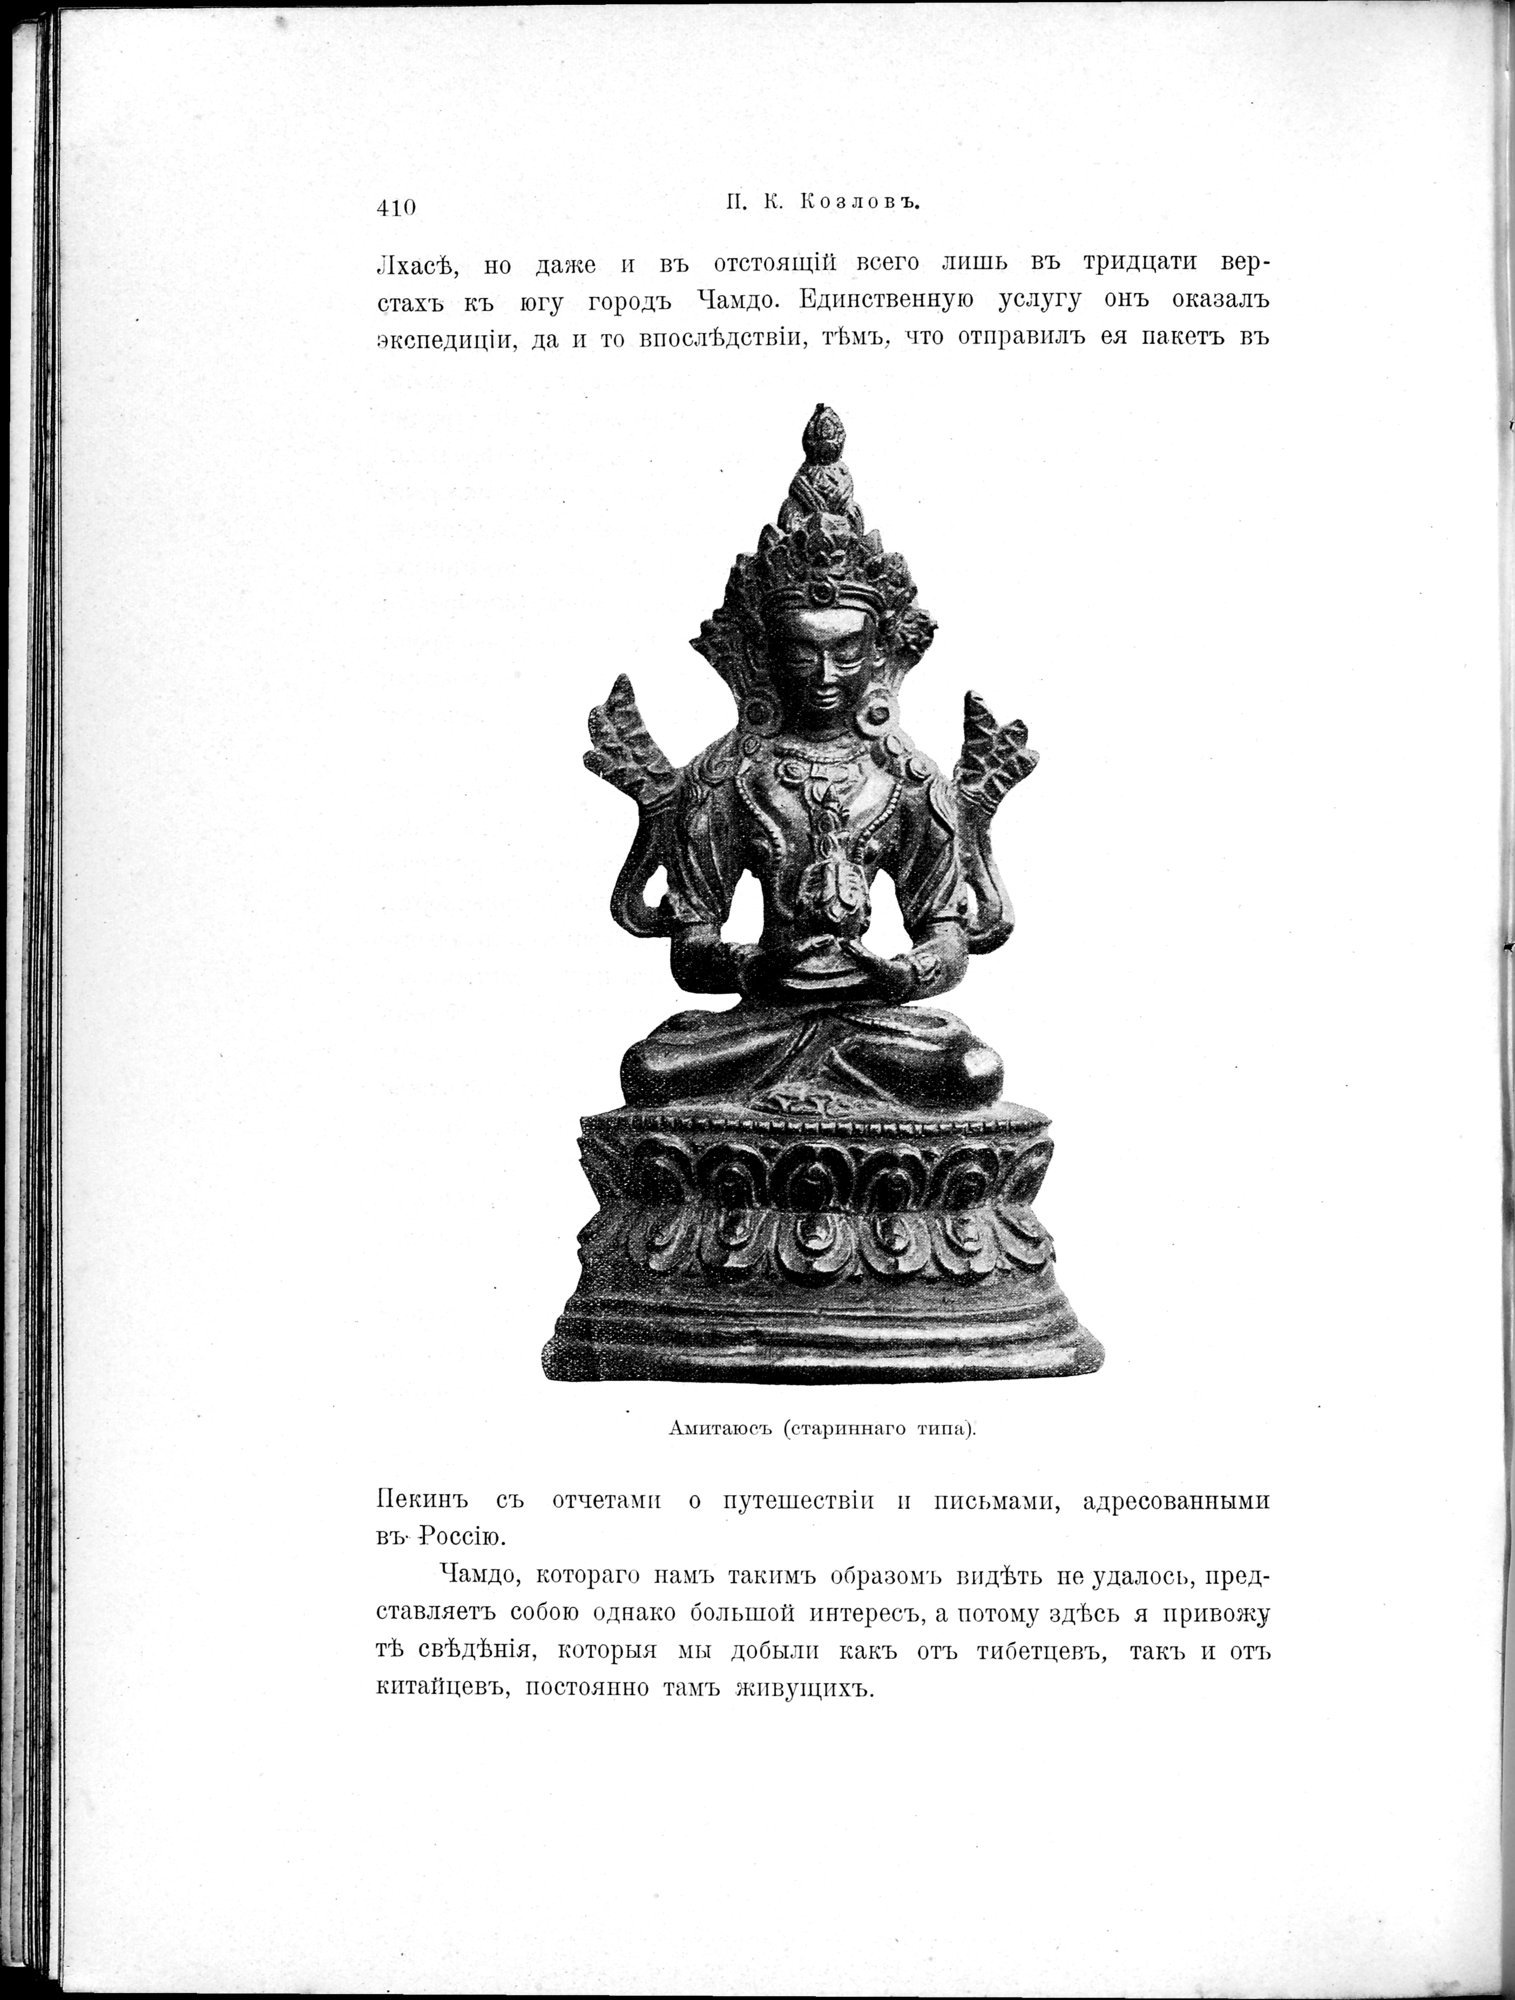 Mongoliia i Kam : vol.2 / Page 206 (Grayscale High Resolution Image)